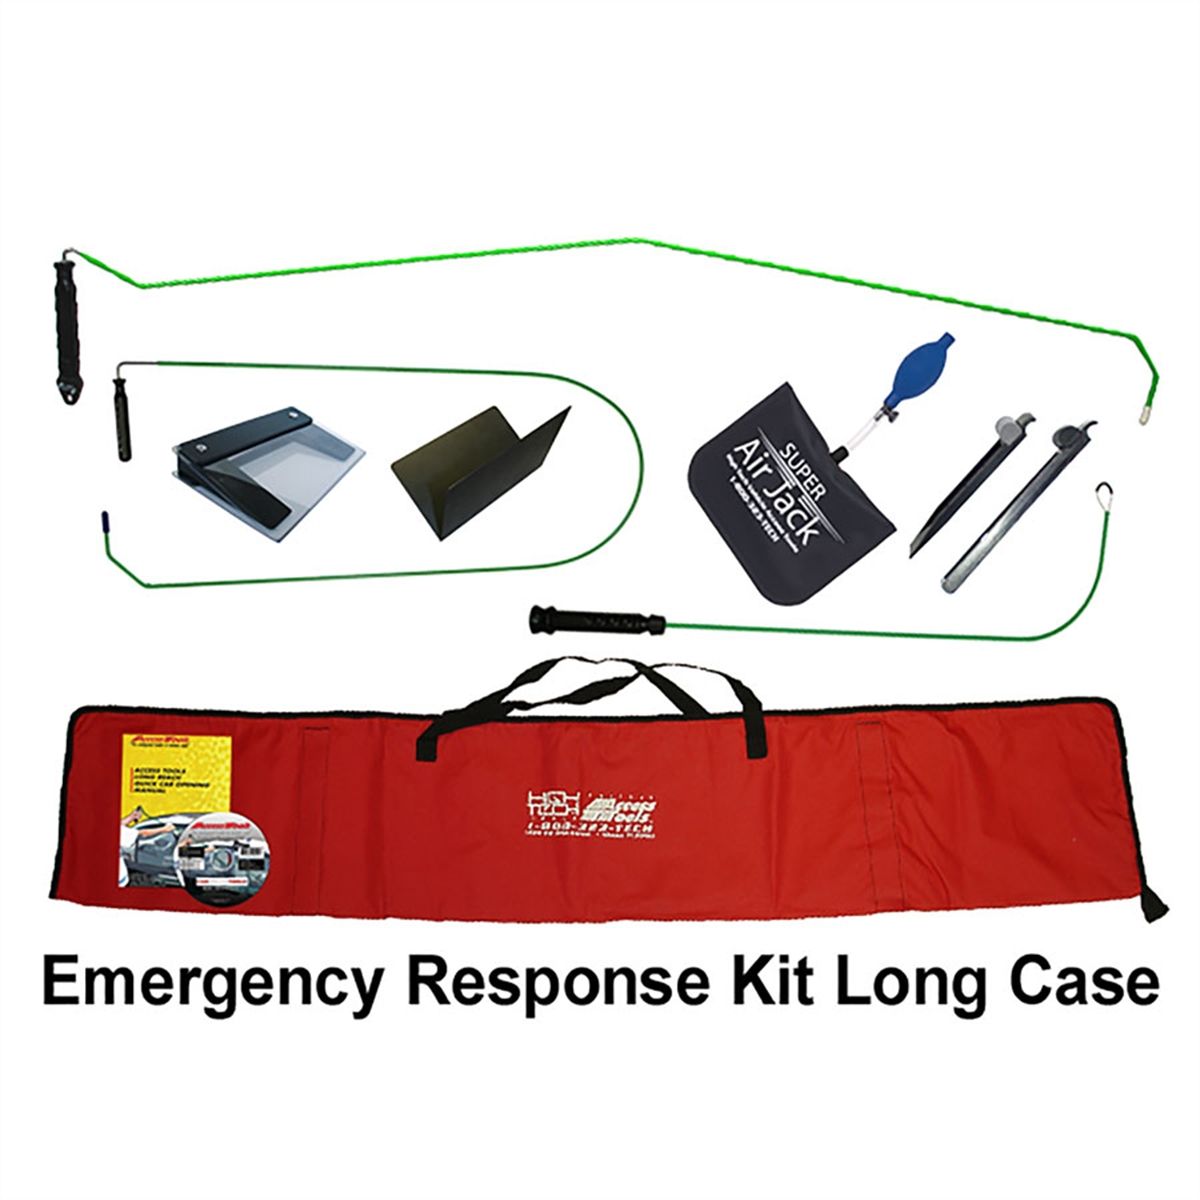 Emergency Response Kit Long Case